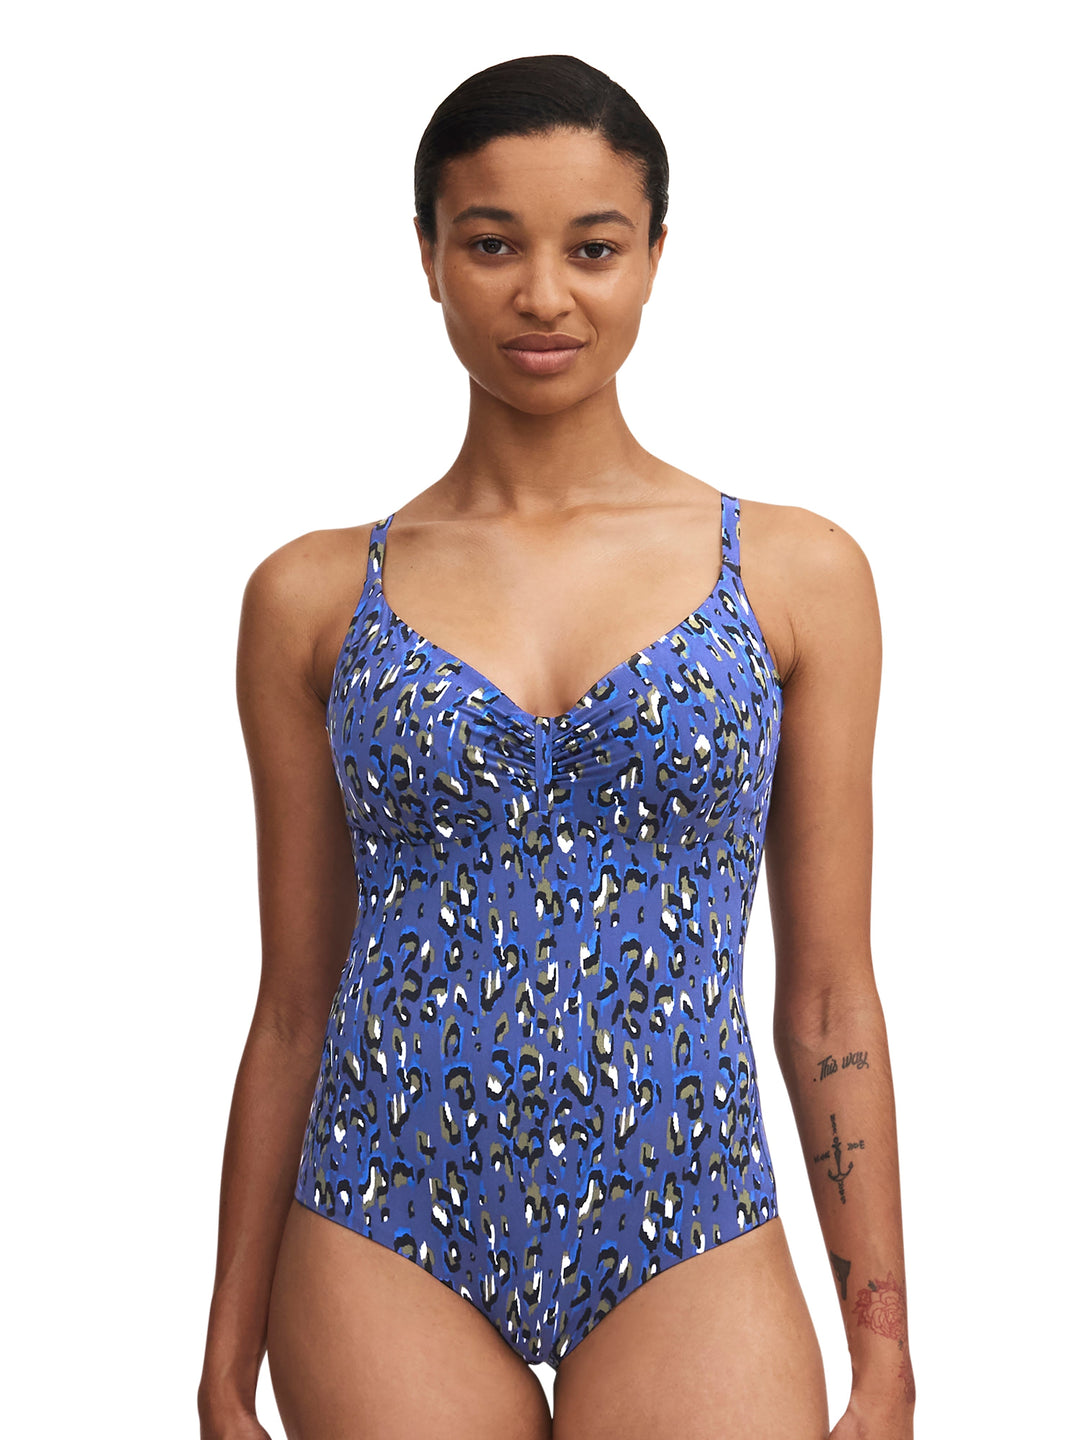 Chantelle Swimwear Eos カバーリングがアンダーワイヤーの水着 - Blue Leopard Full Cup Swimsuit Chantelle